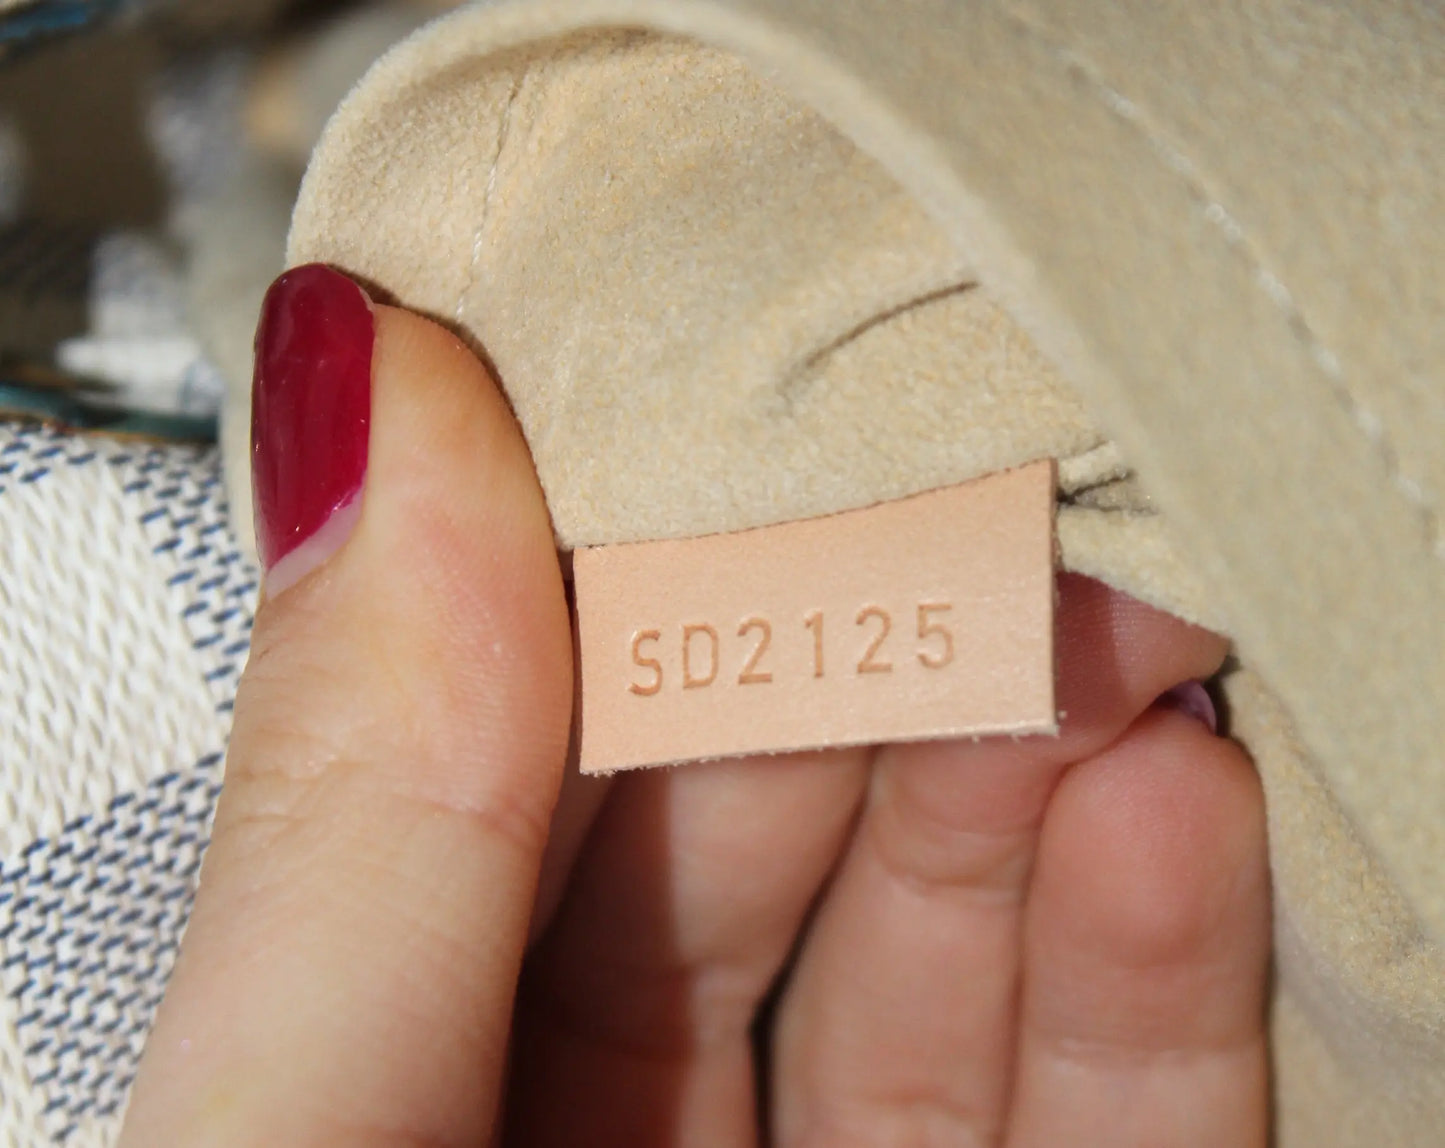 Louis Vuitton SD date code